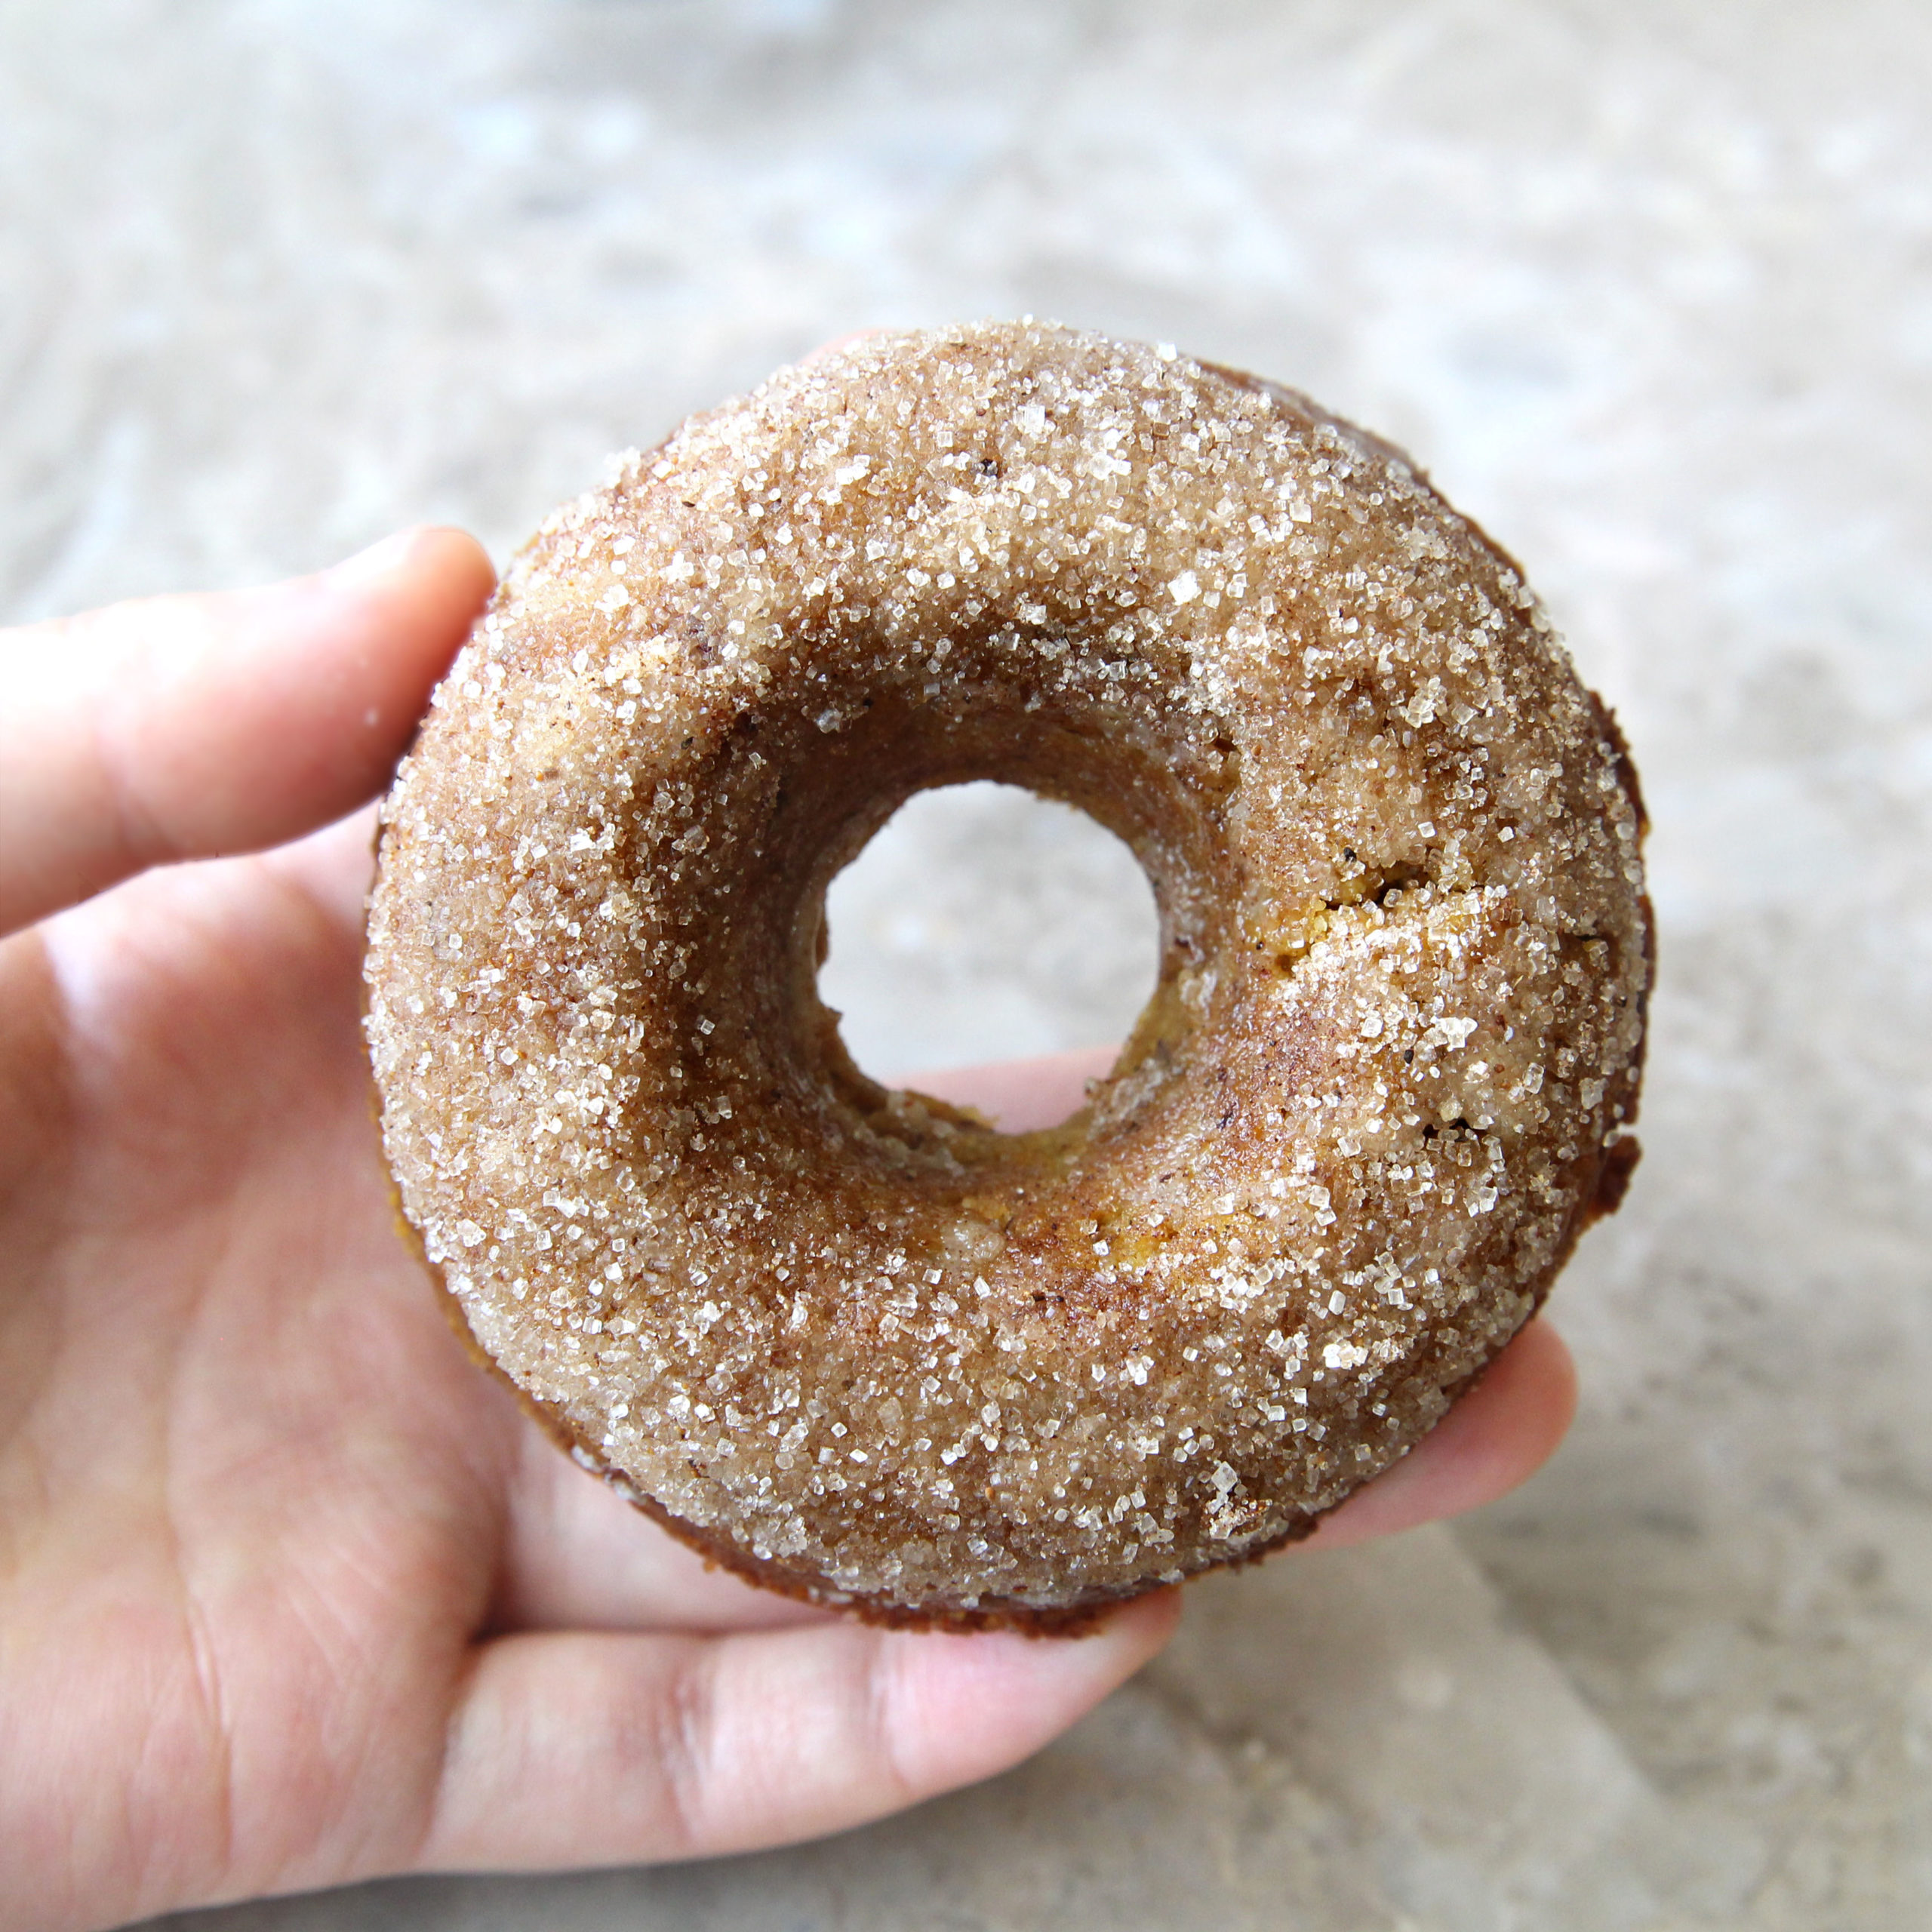 How to Make Gluten-Free Sweet Potato Donut (Made with Almond Flour!) - sweet potato donut